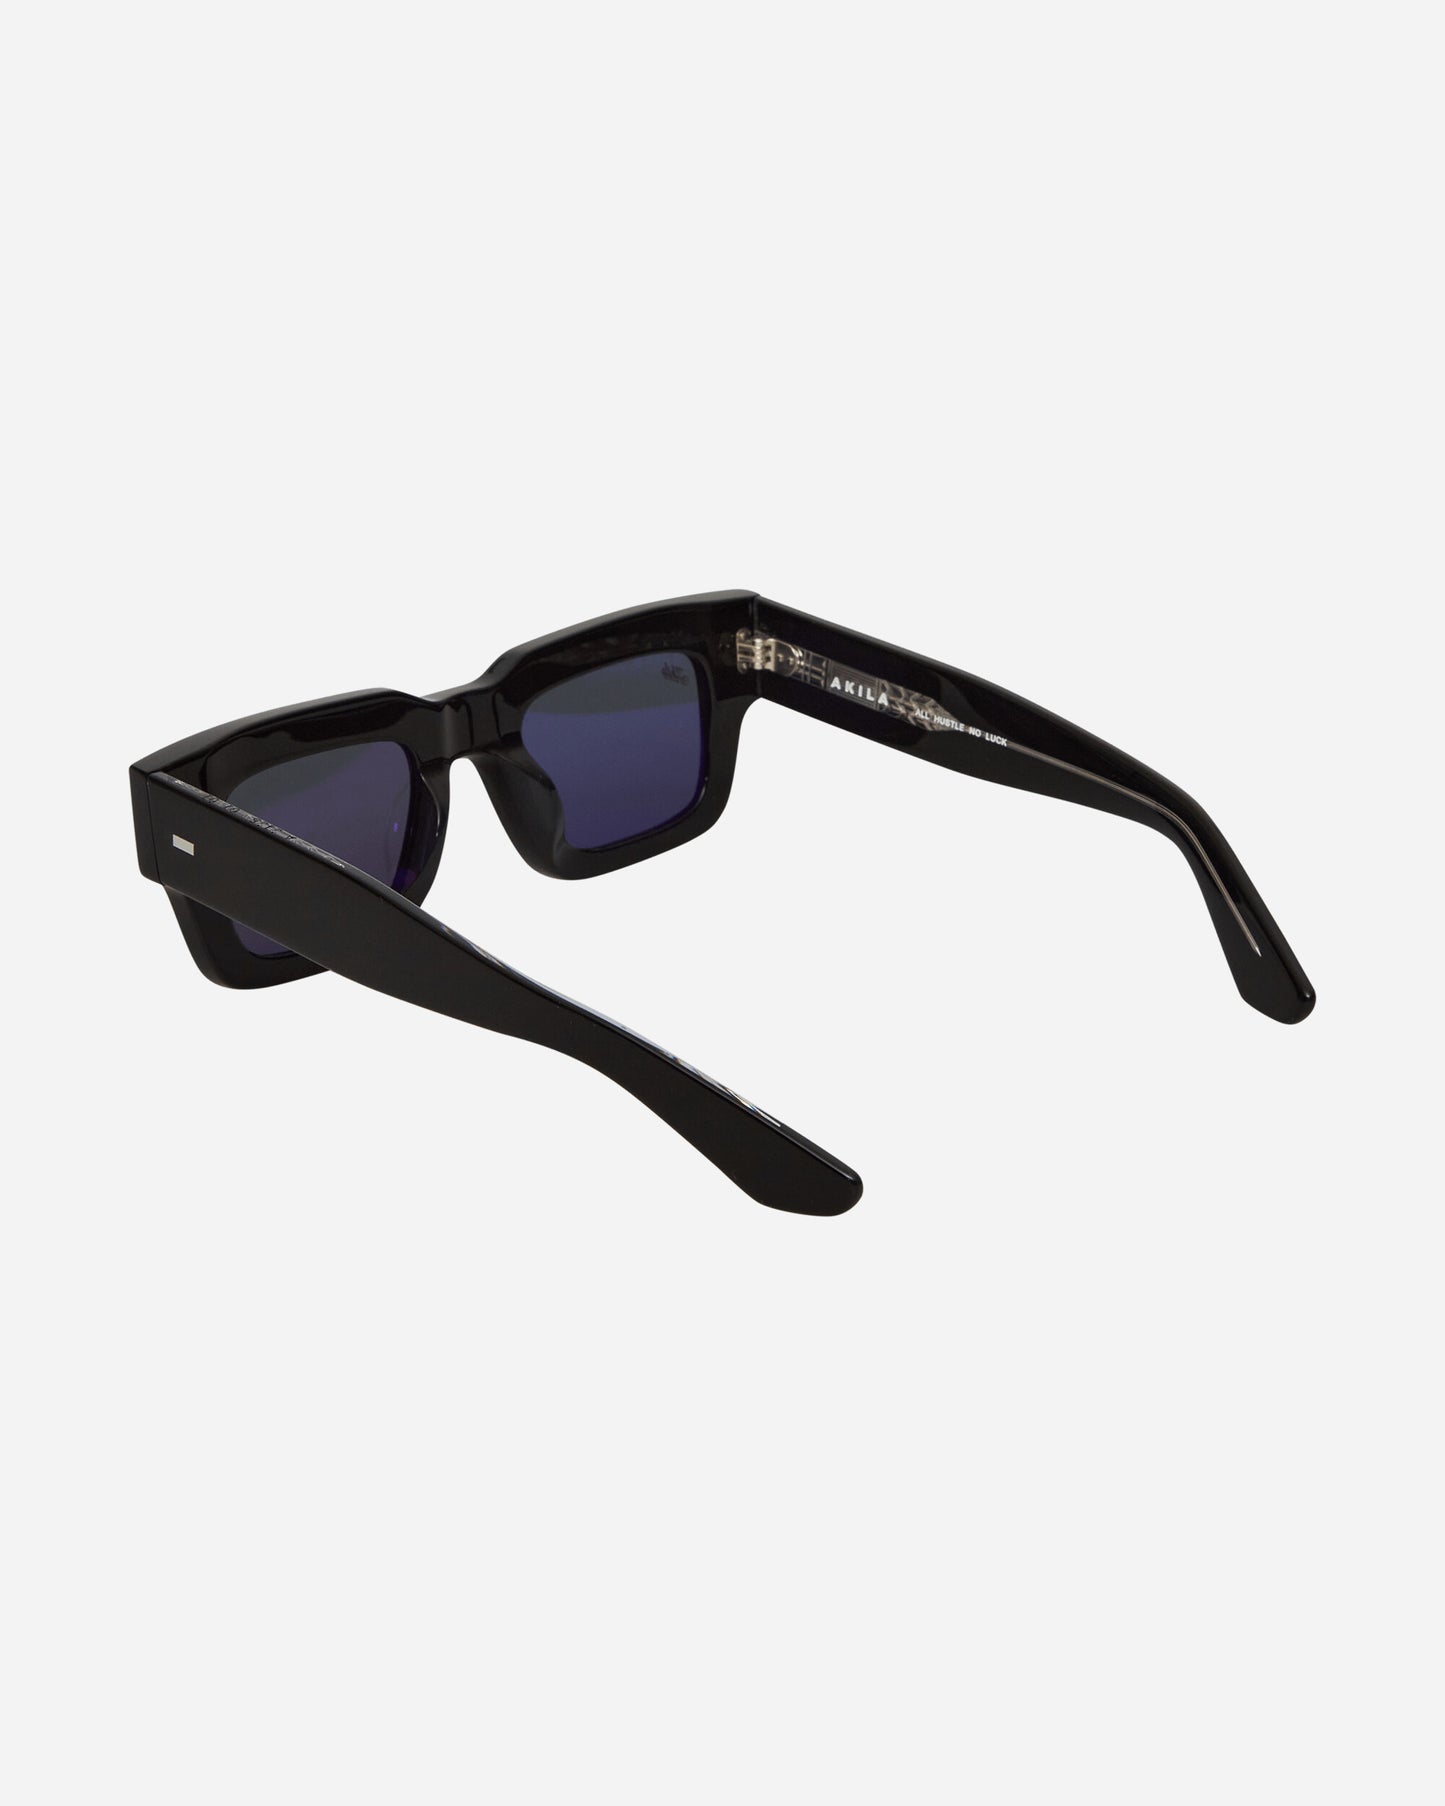 AKILA Ares Black Eyewear Sunglasses 212501 01